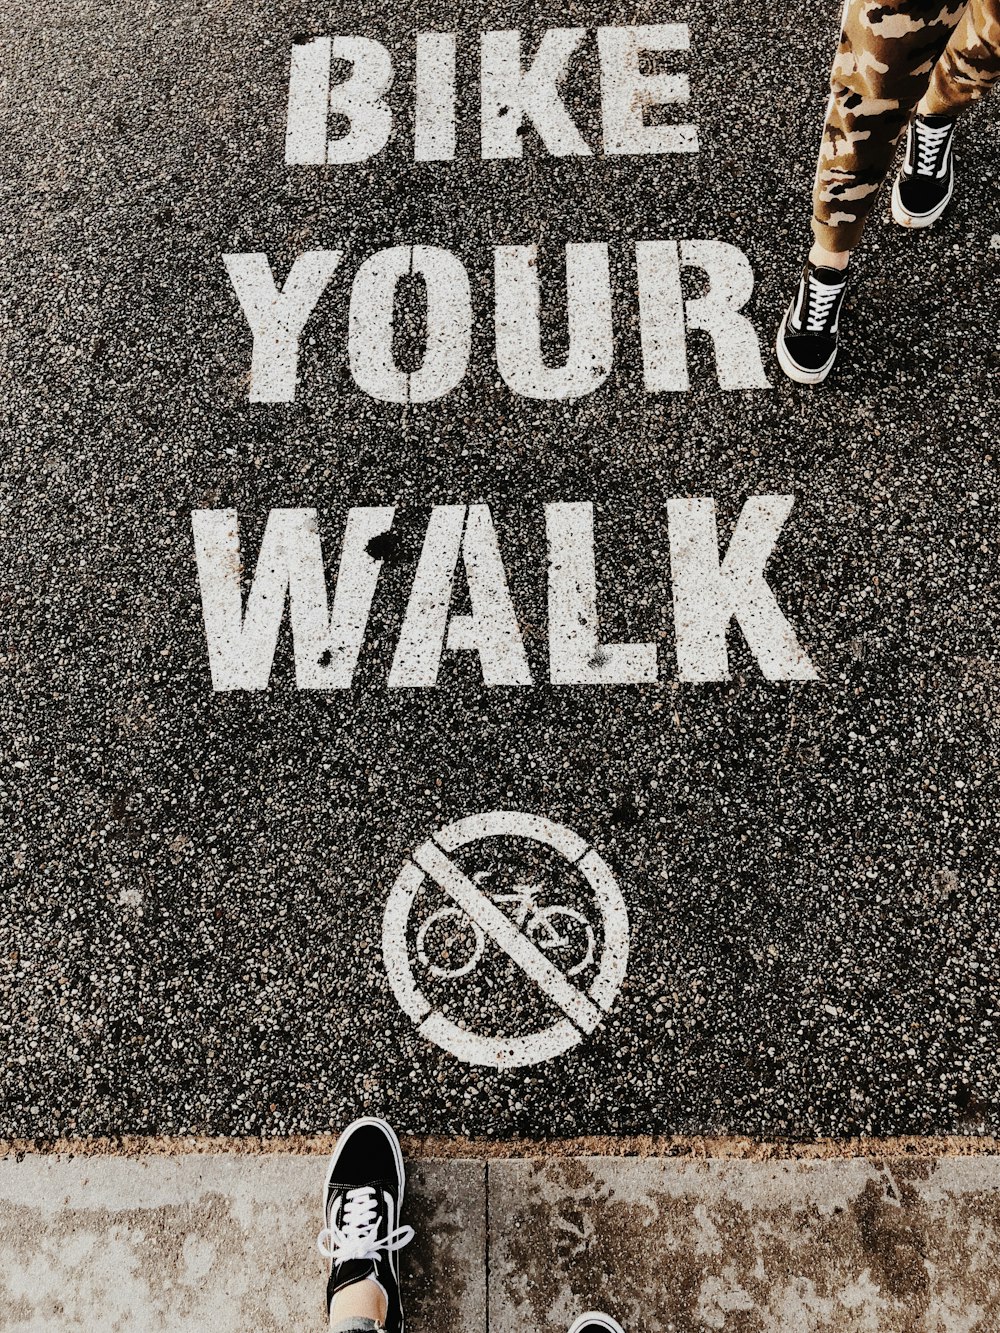 Asfalto impreso Bike Your Walk